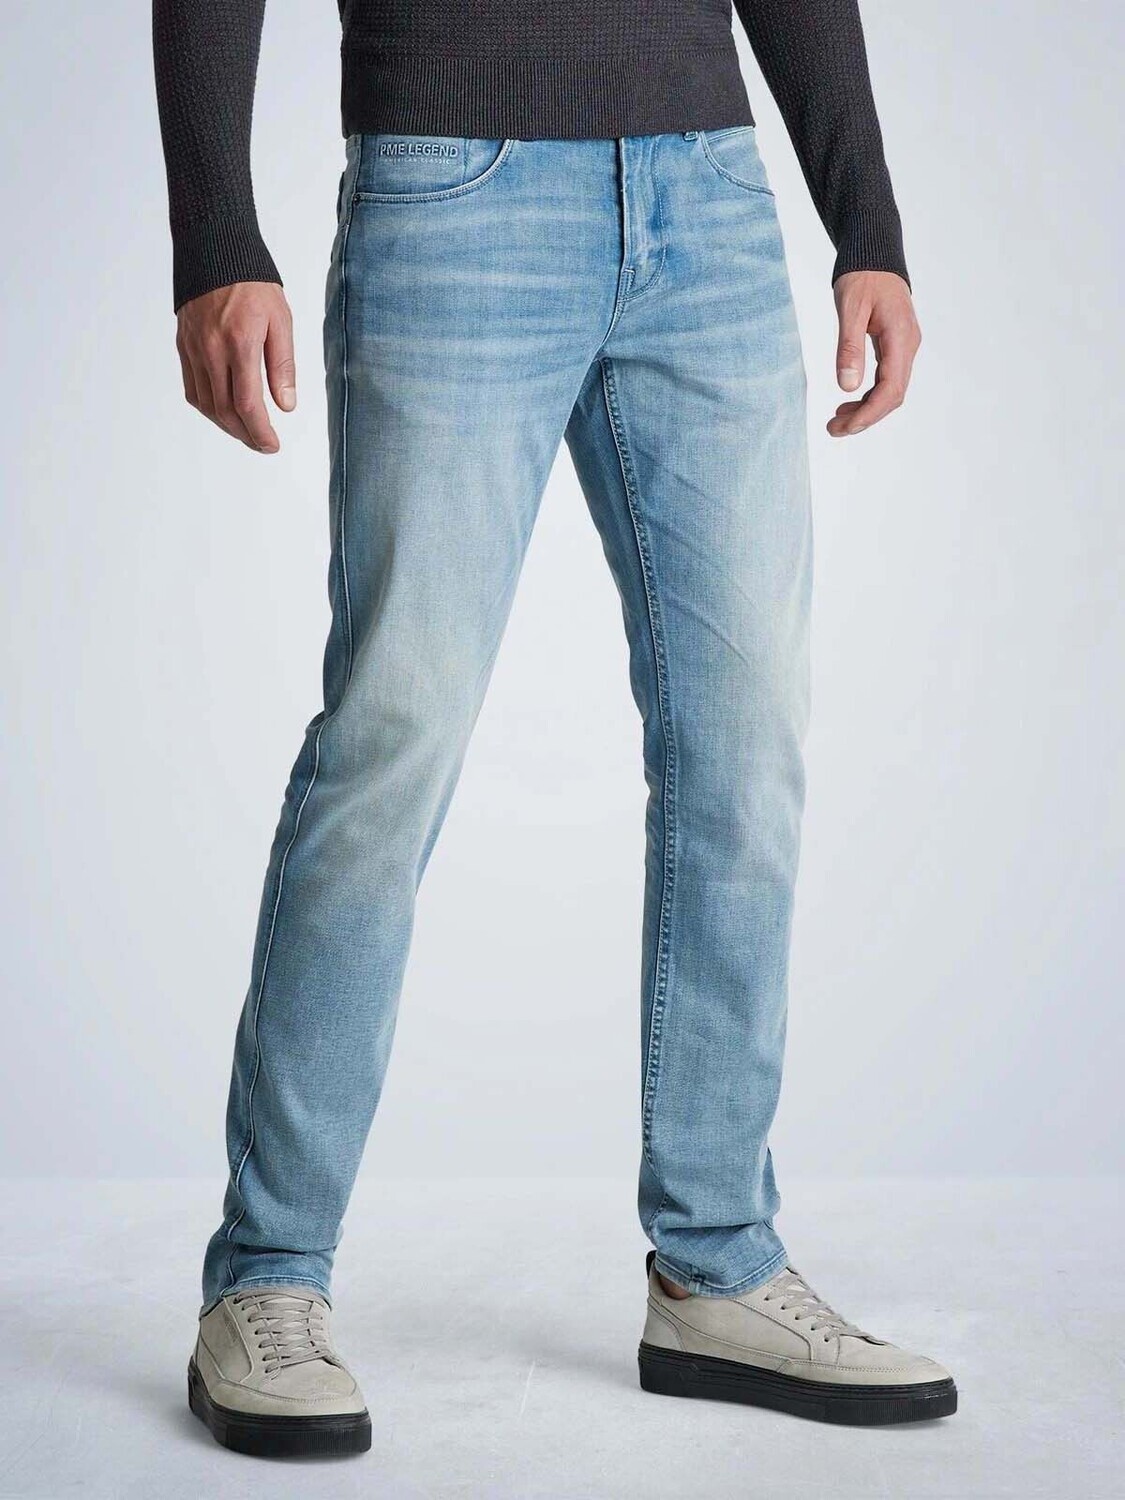 PME Legend | Nightflight Regular Fit Jeans PTR120-BCL